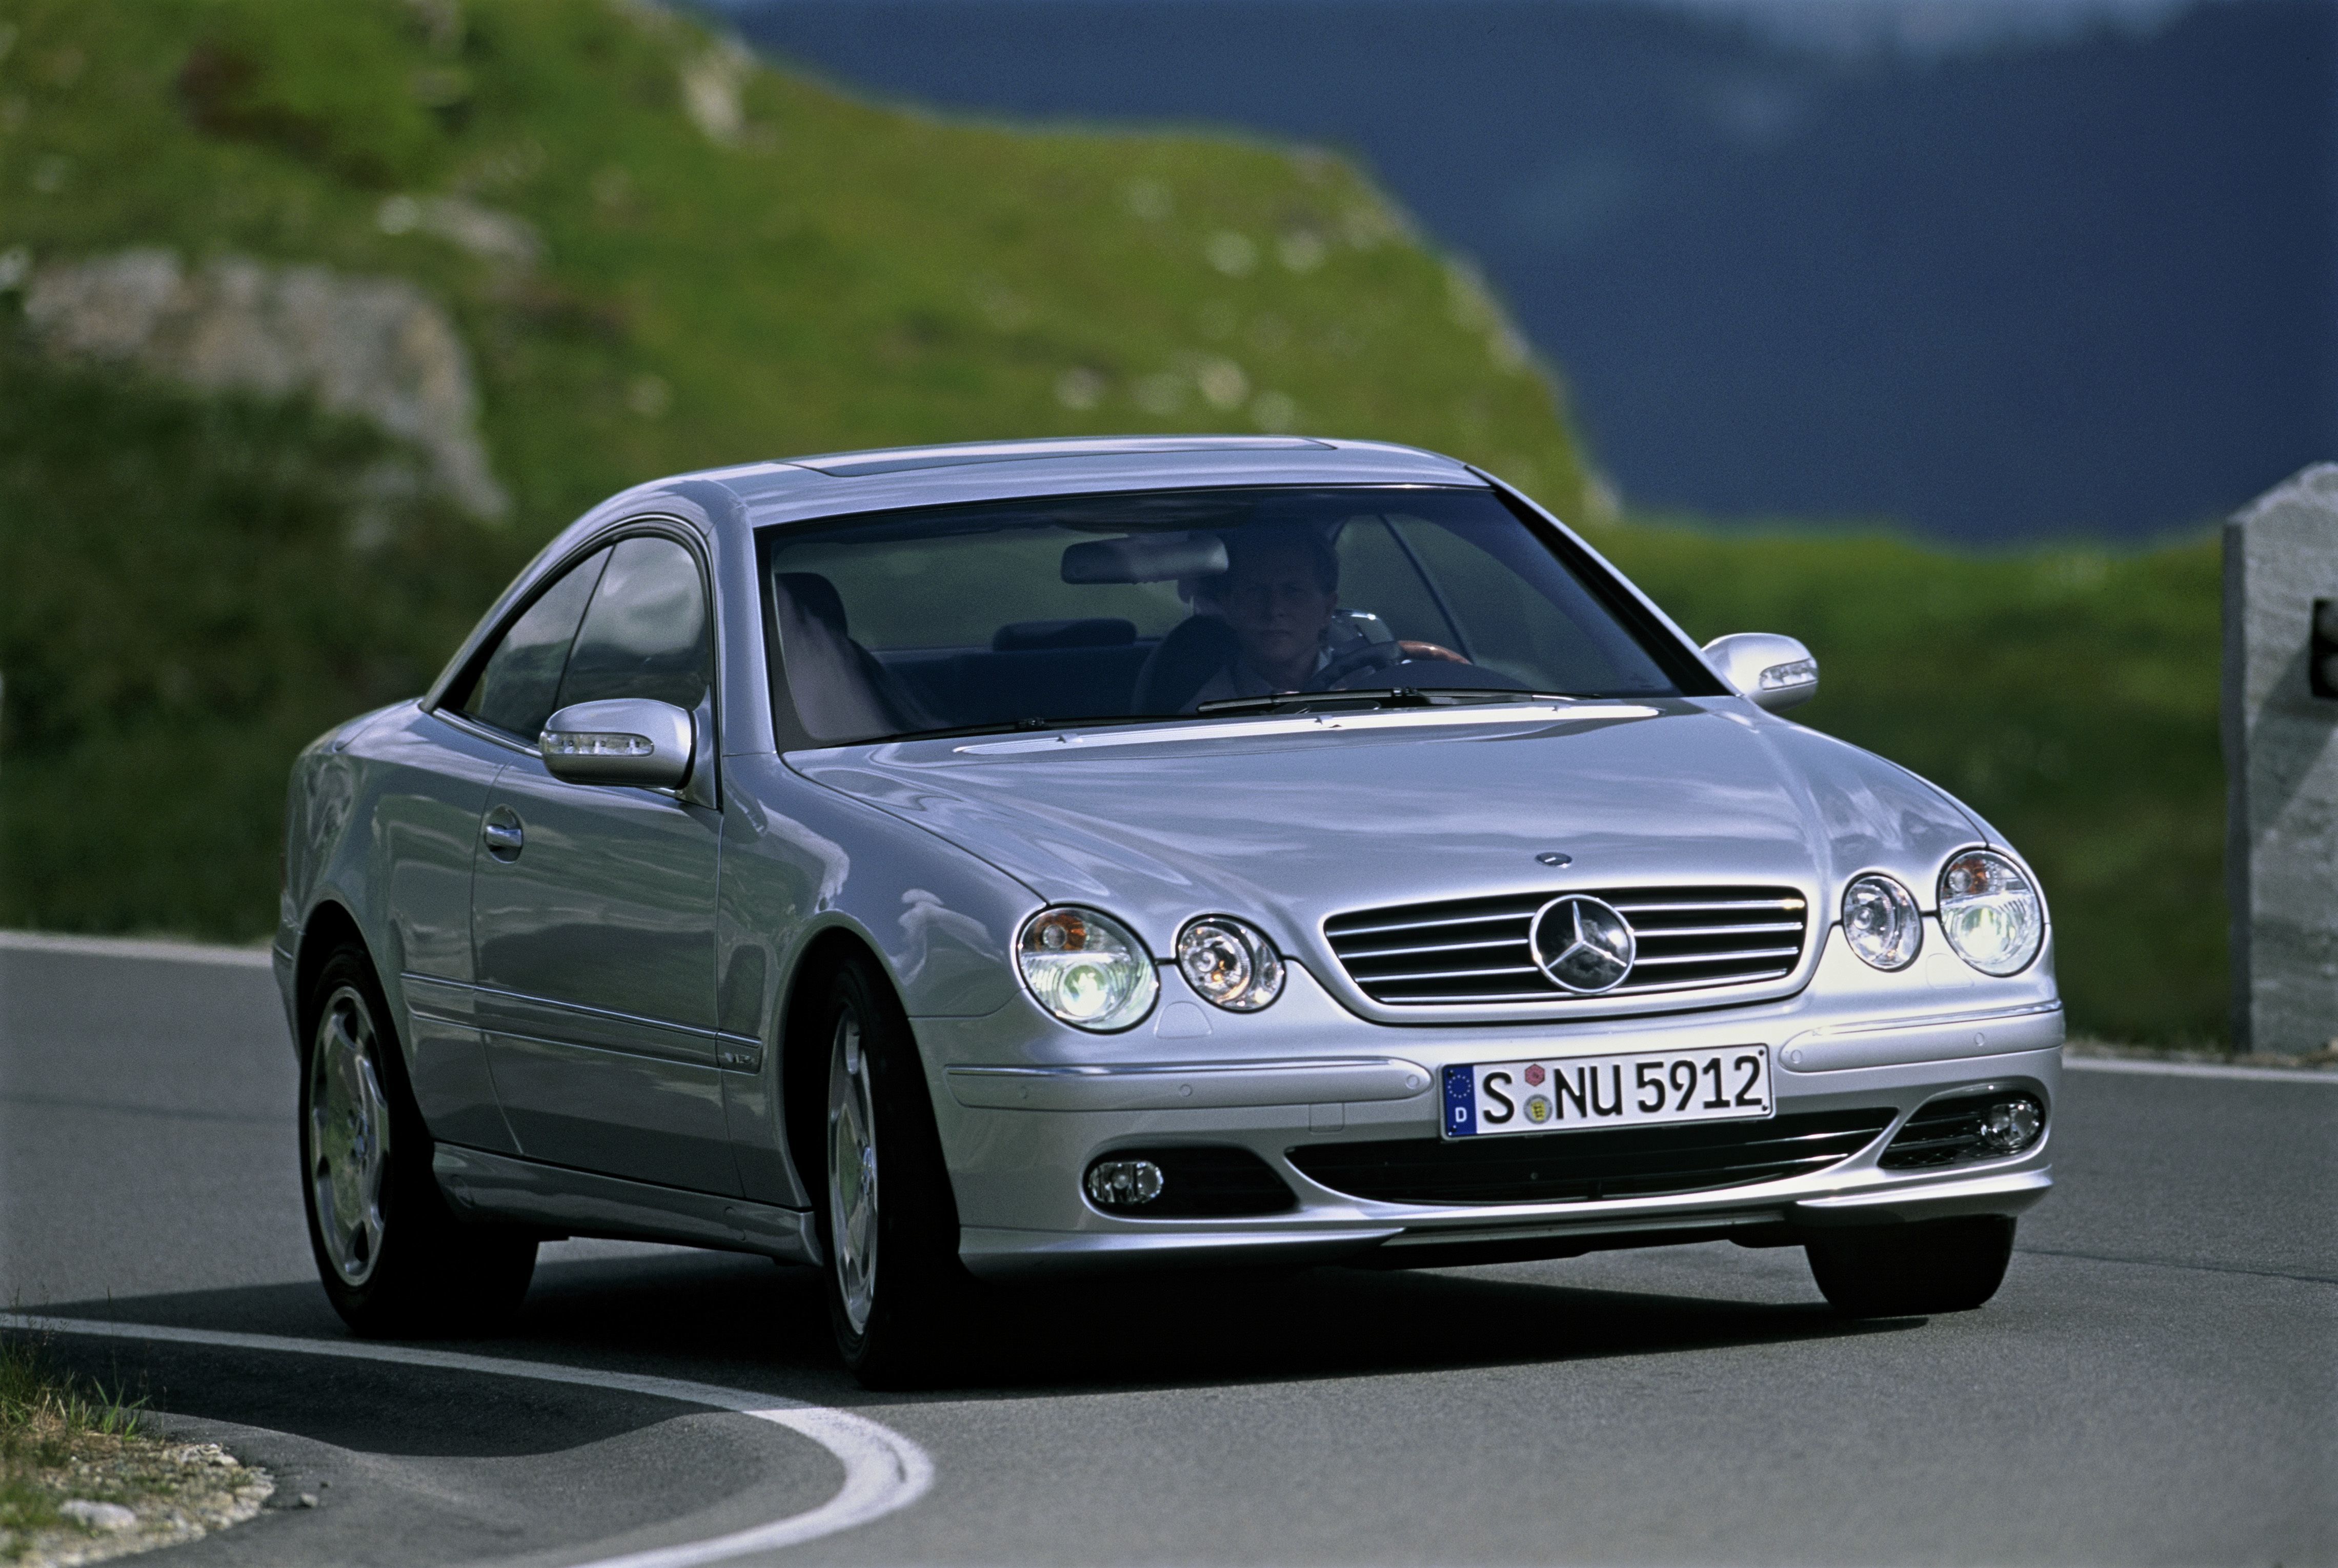 Cl fora. Mercedes-Benz cl600 c215. Mercedes-Benz CL 600 2002. Mercedes cl600 2002. Mercedes Benz CL 2002.